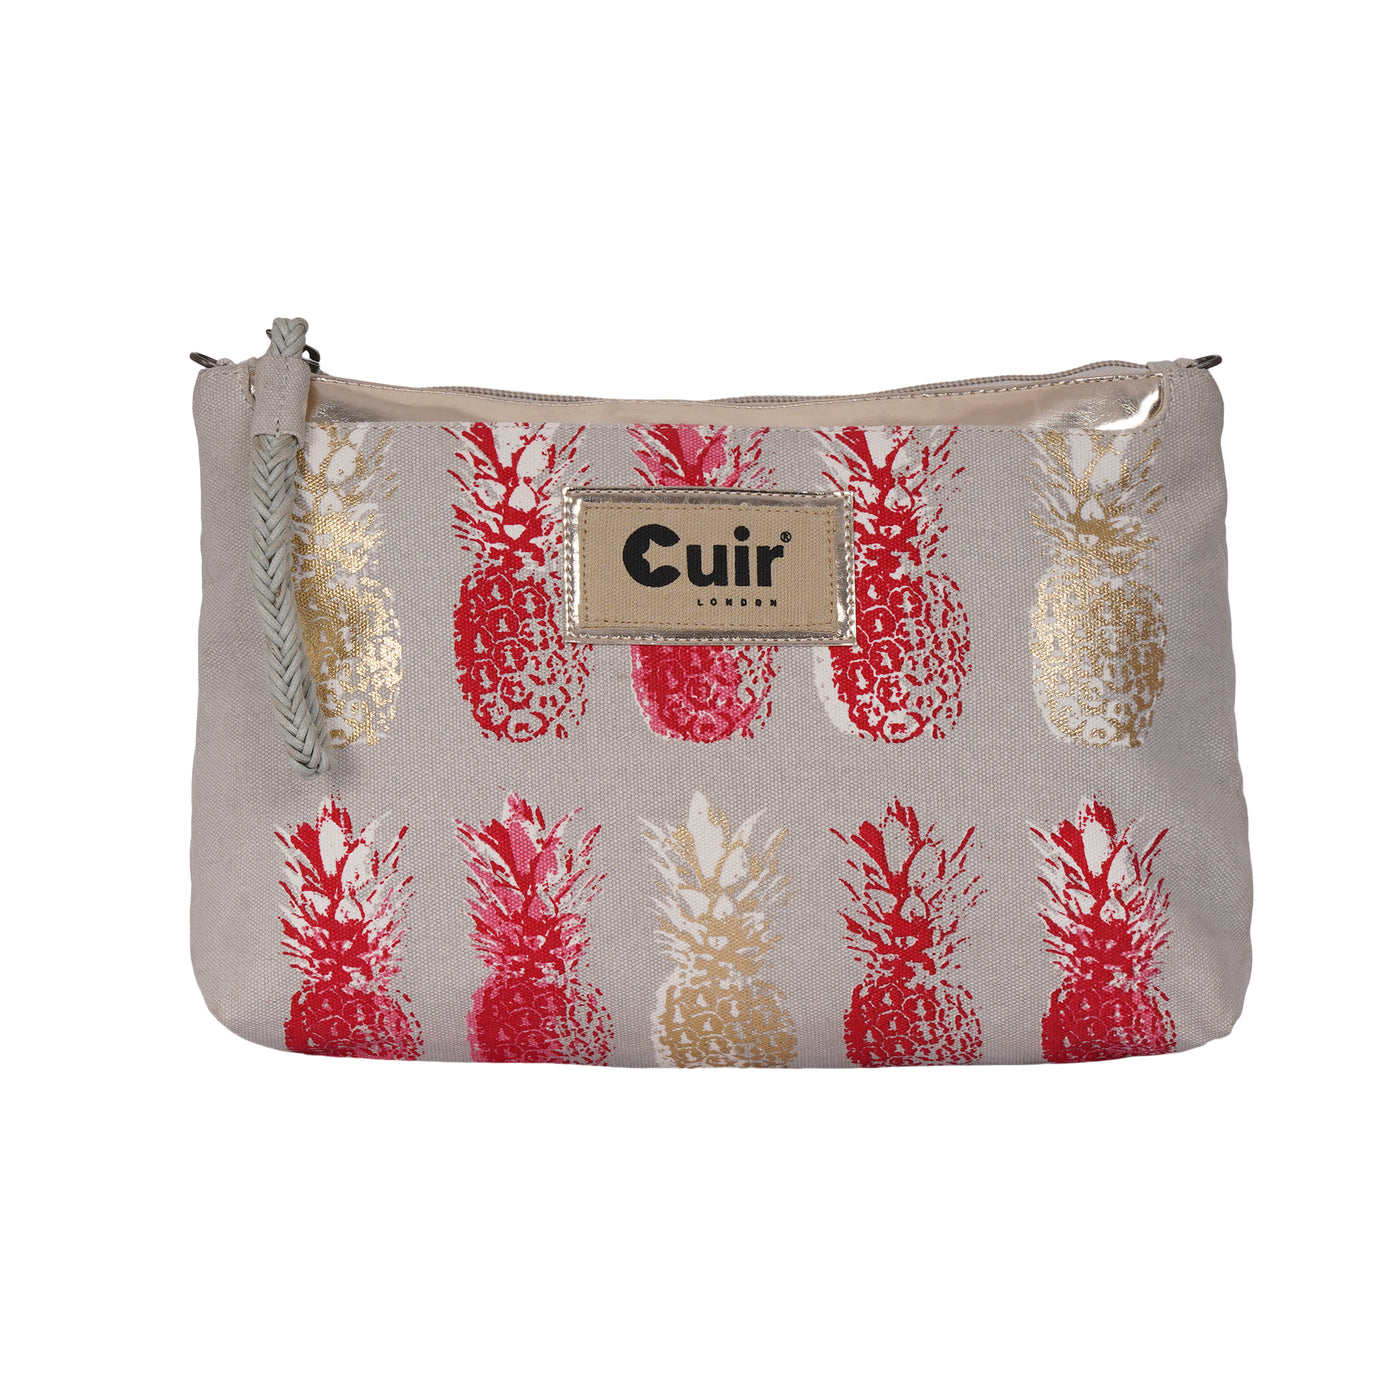 Pineapple clutch bag